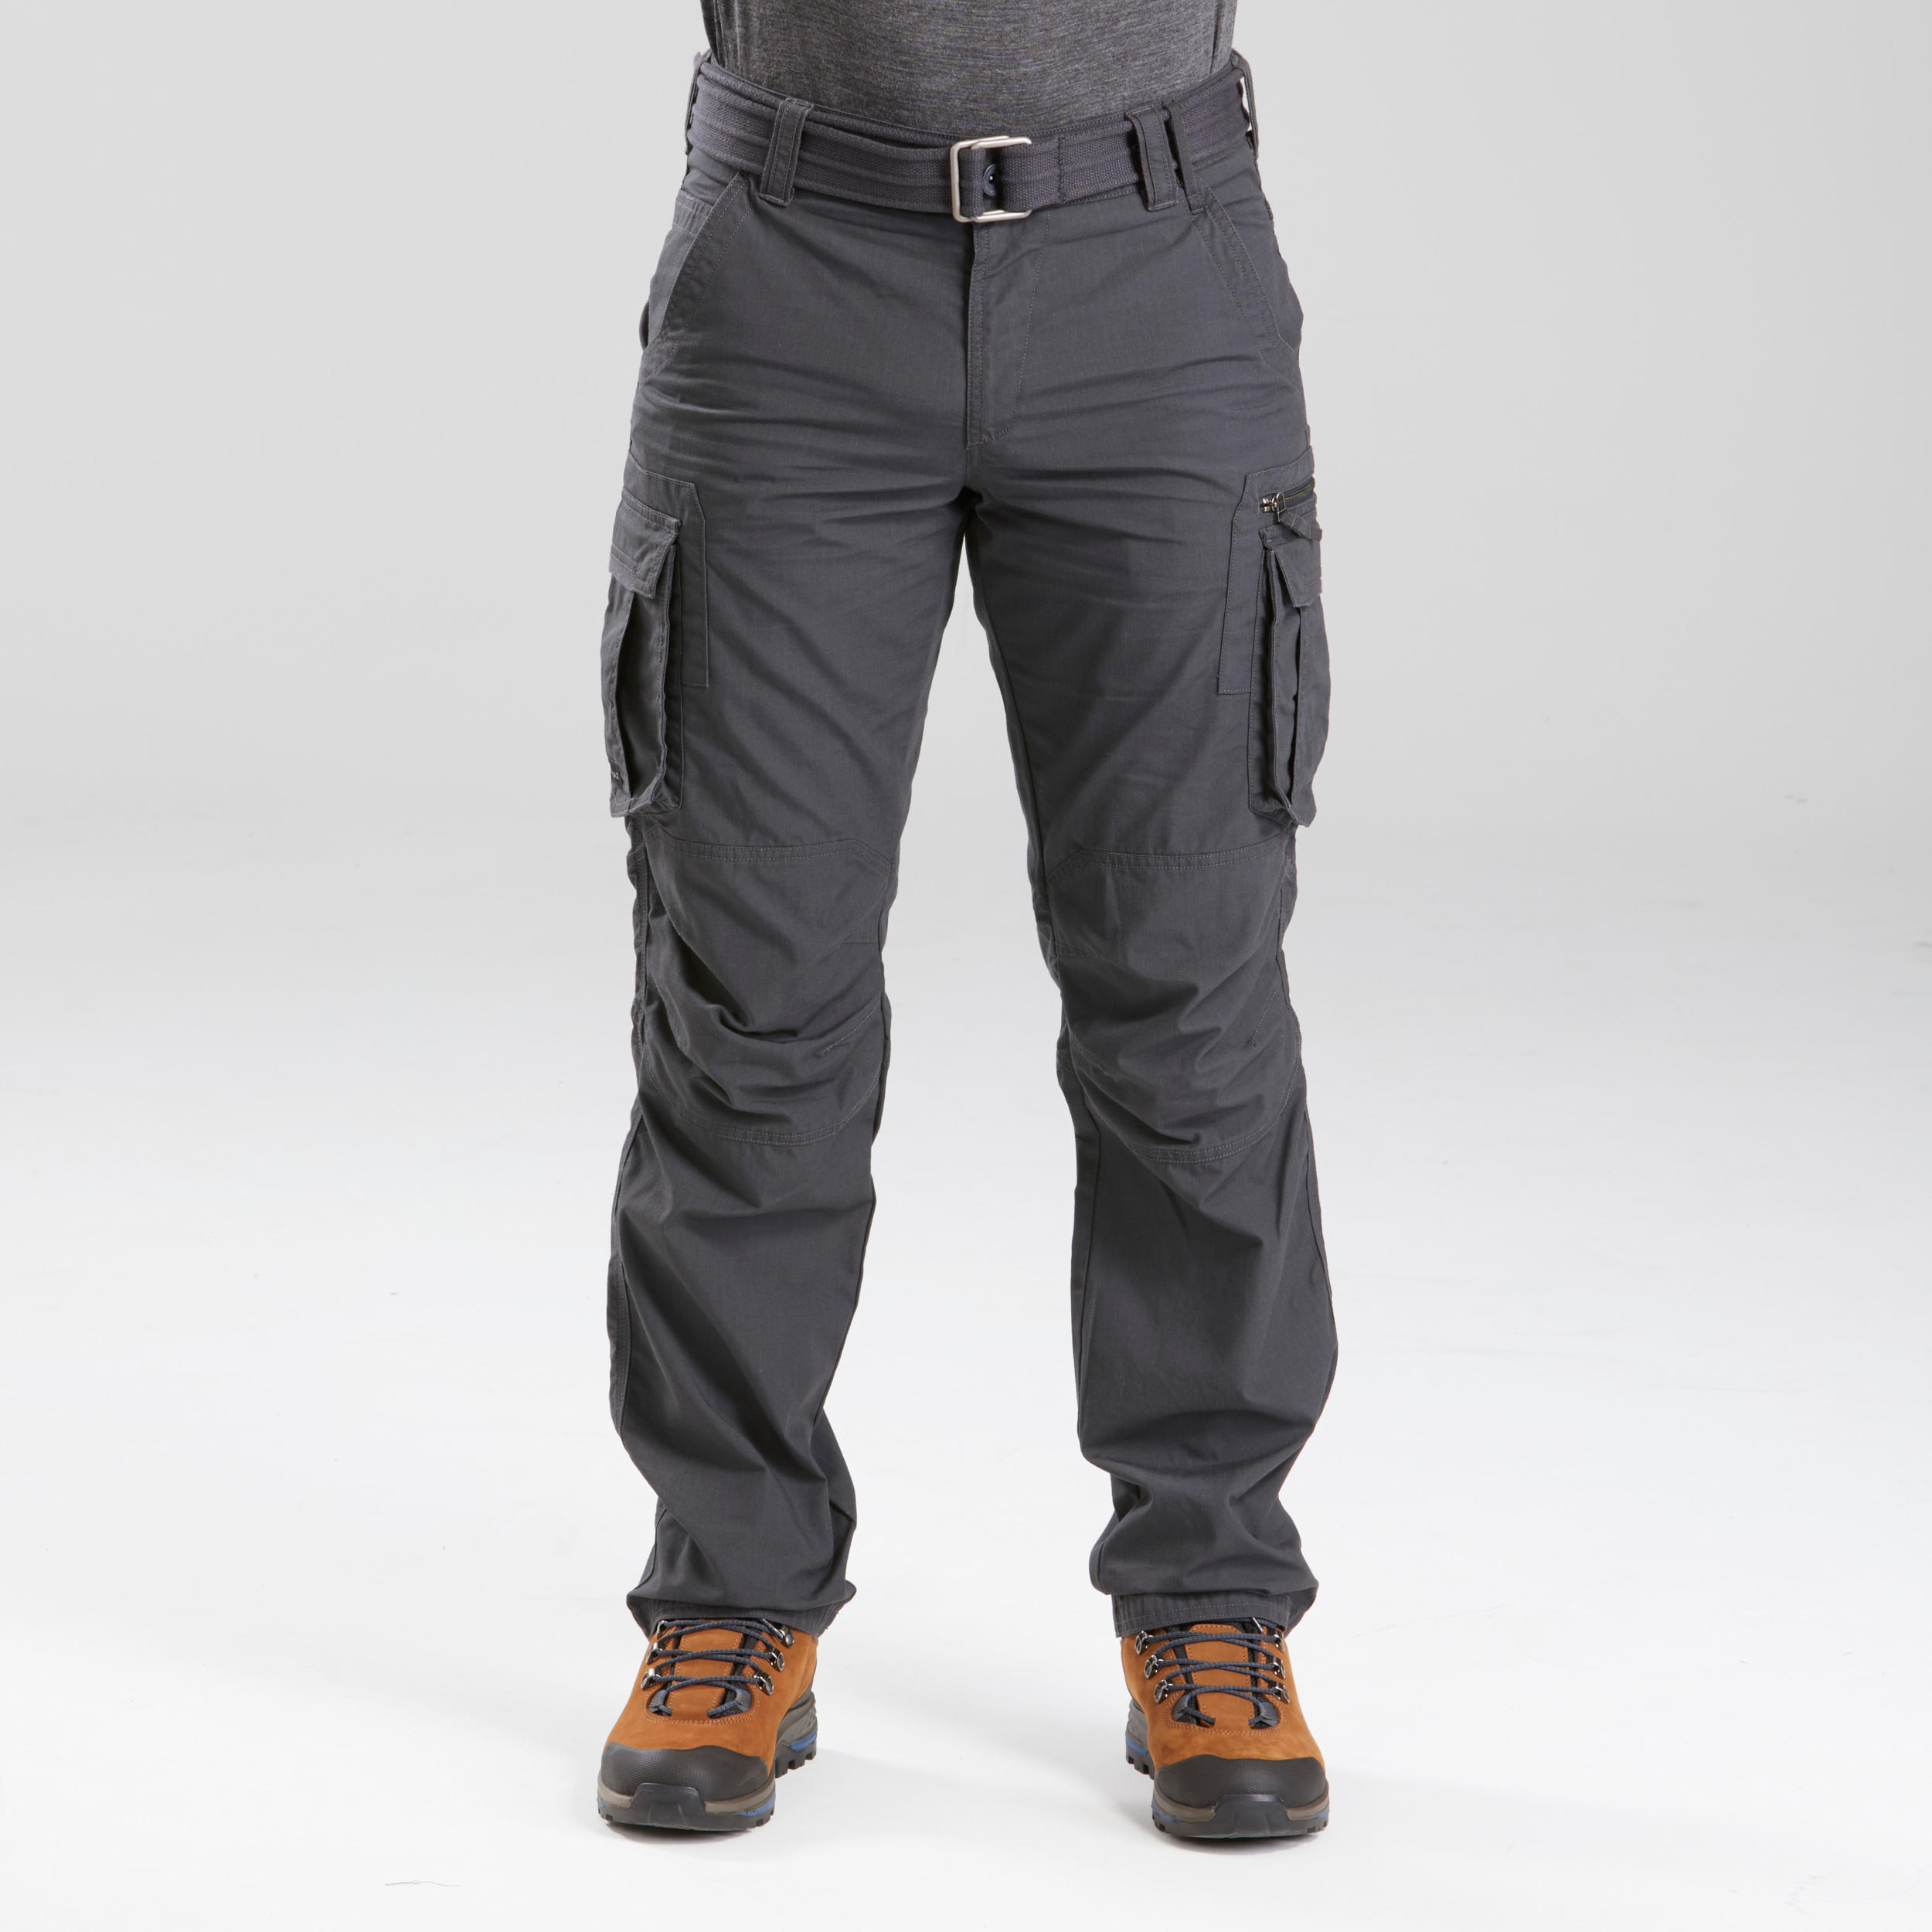 Unbranded Men's Work Cargo Pants Tactical Combat Pants India | Ubuy